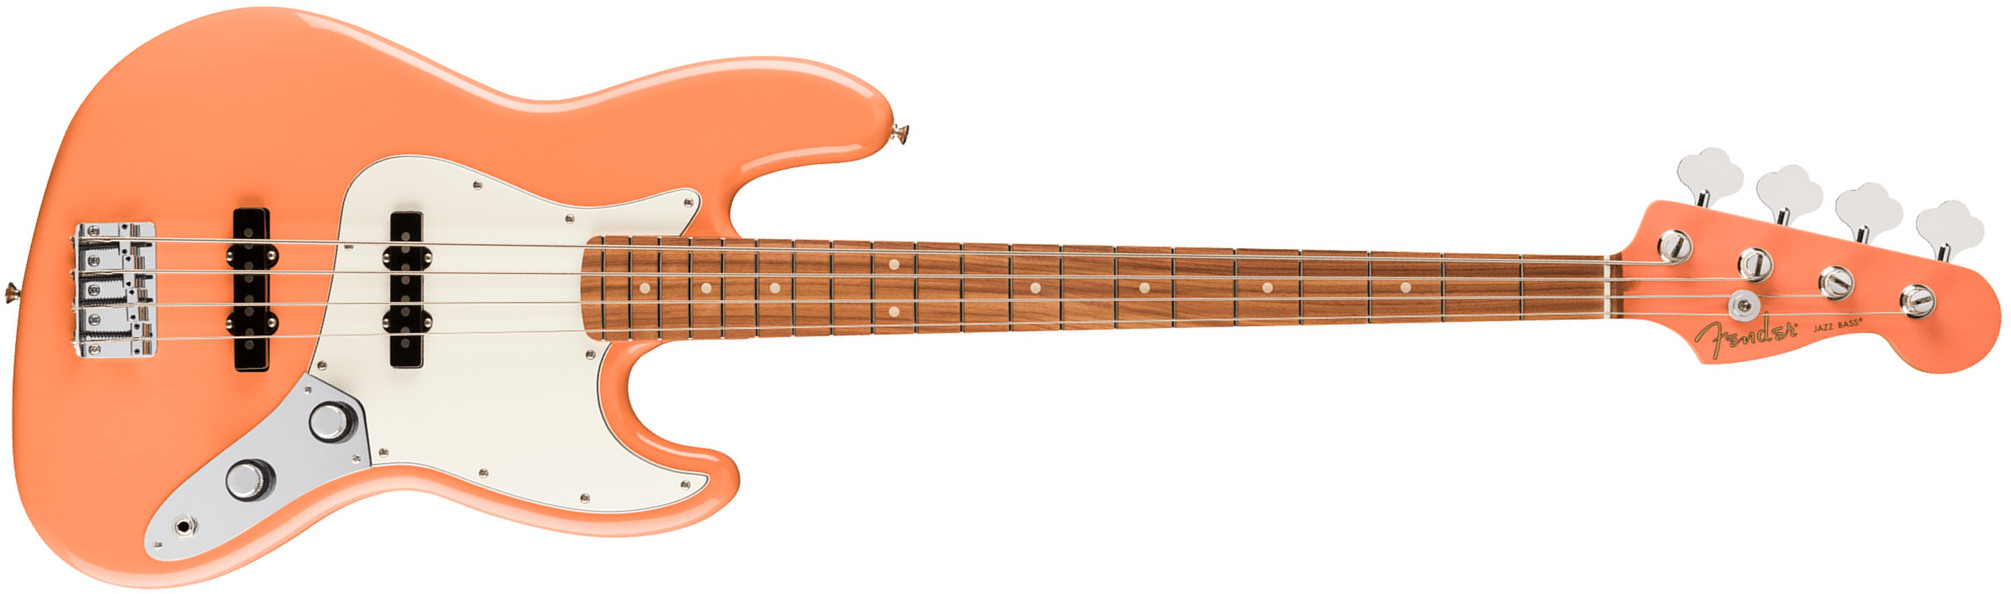 Fender Jazz Bass Player Mex Ltd Pf - Pacific Peach - Solid body elektrische bas - Main picture